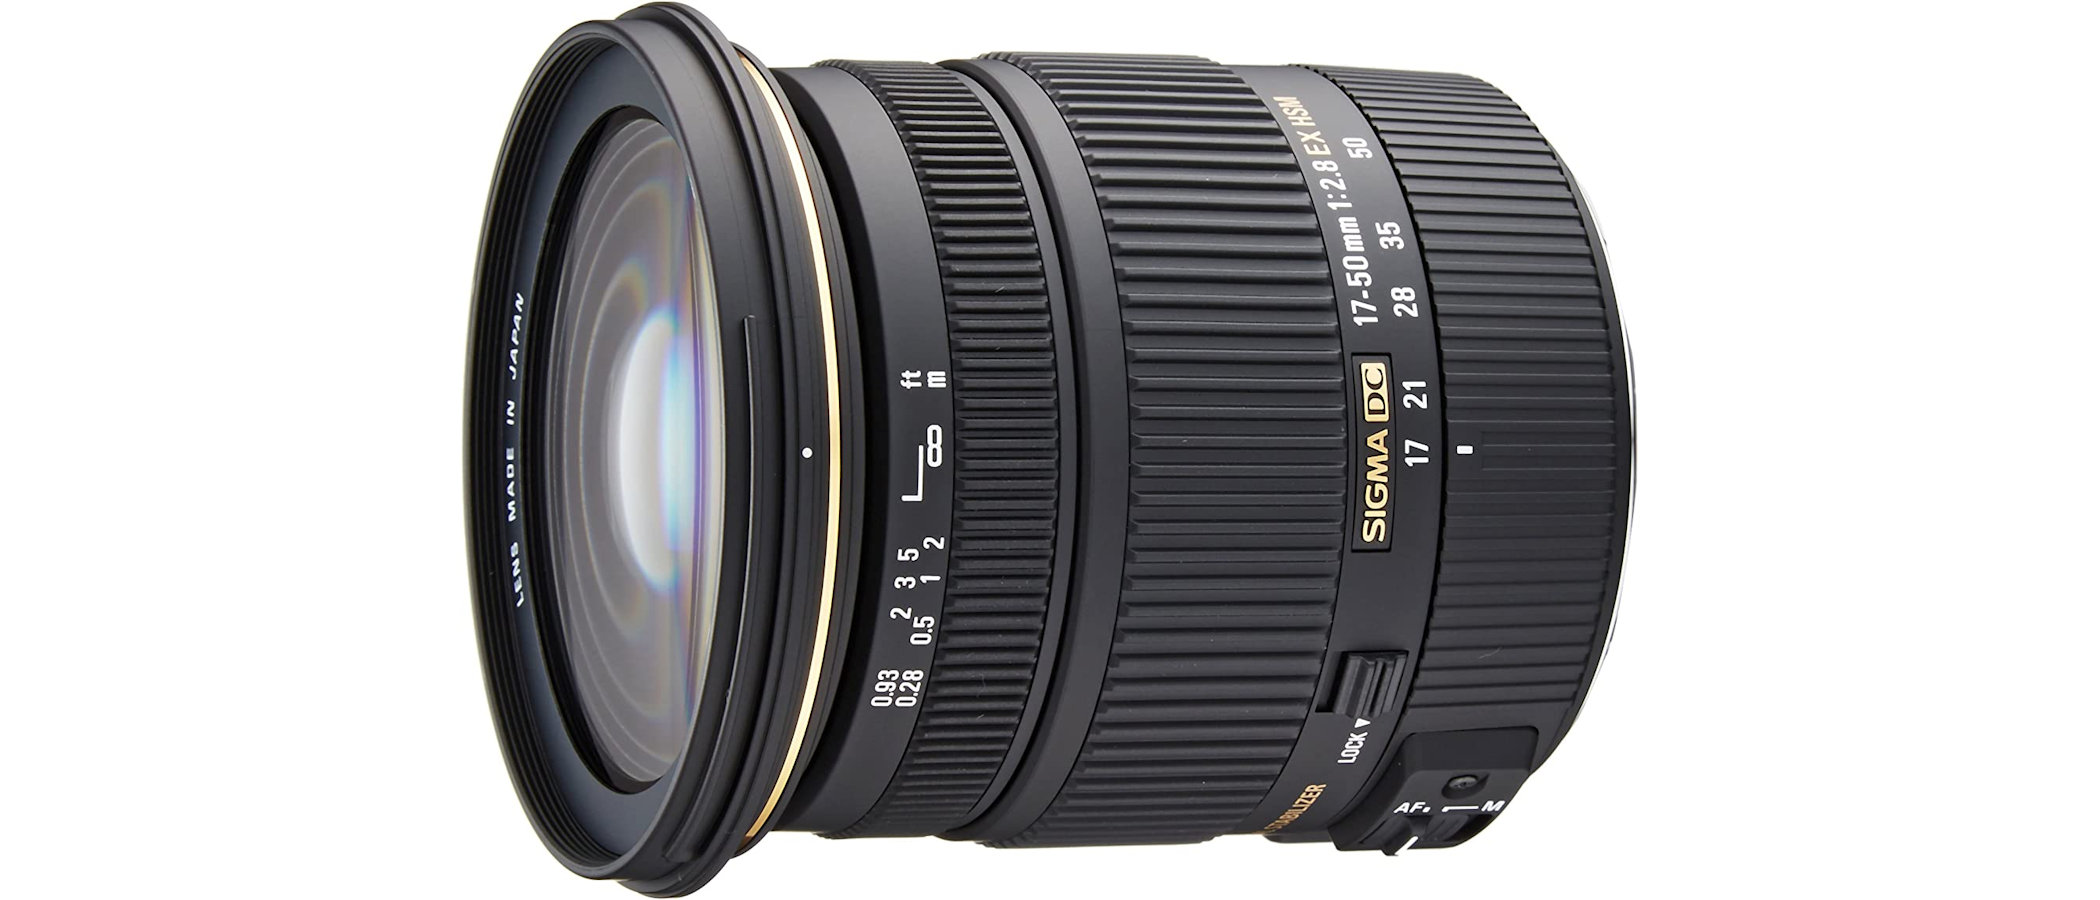 Sigma 17-50mm f/2.8 EX DC OS HSM review | Digital Camera World